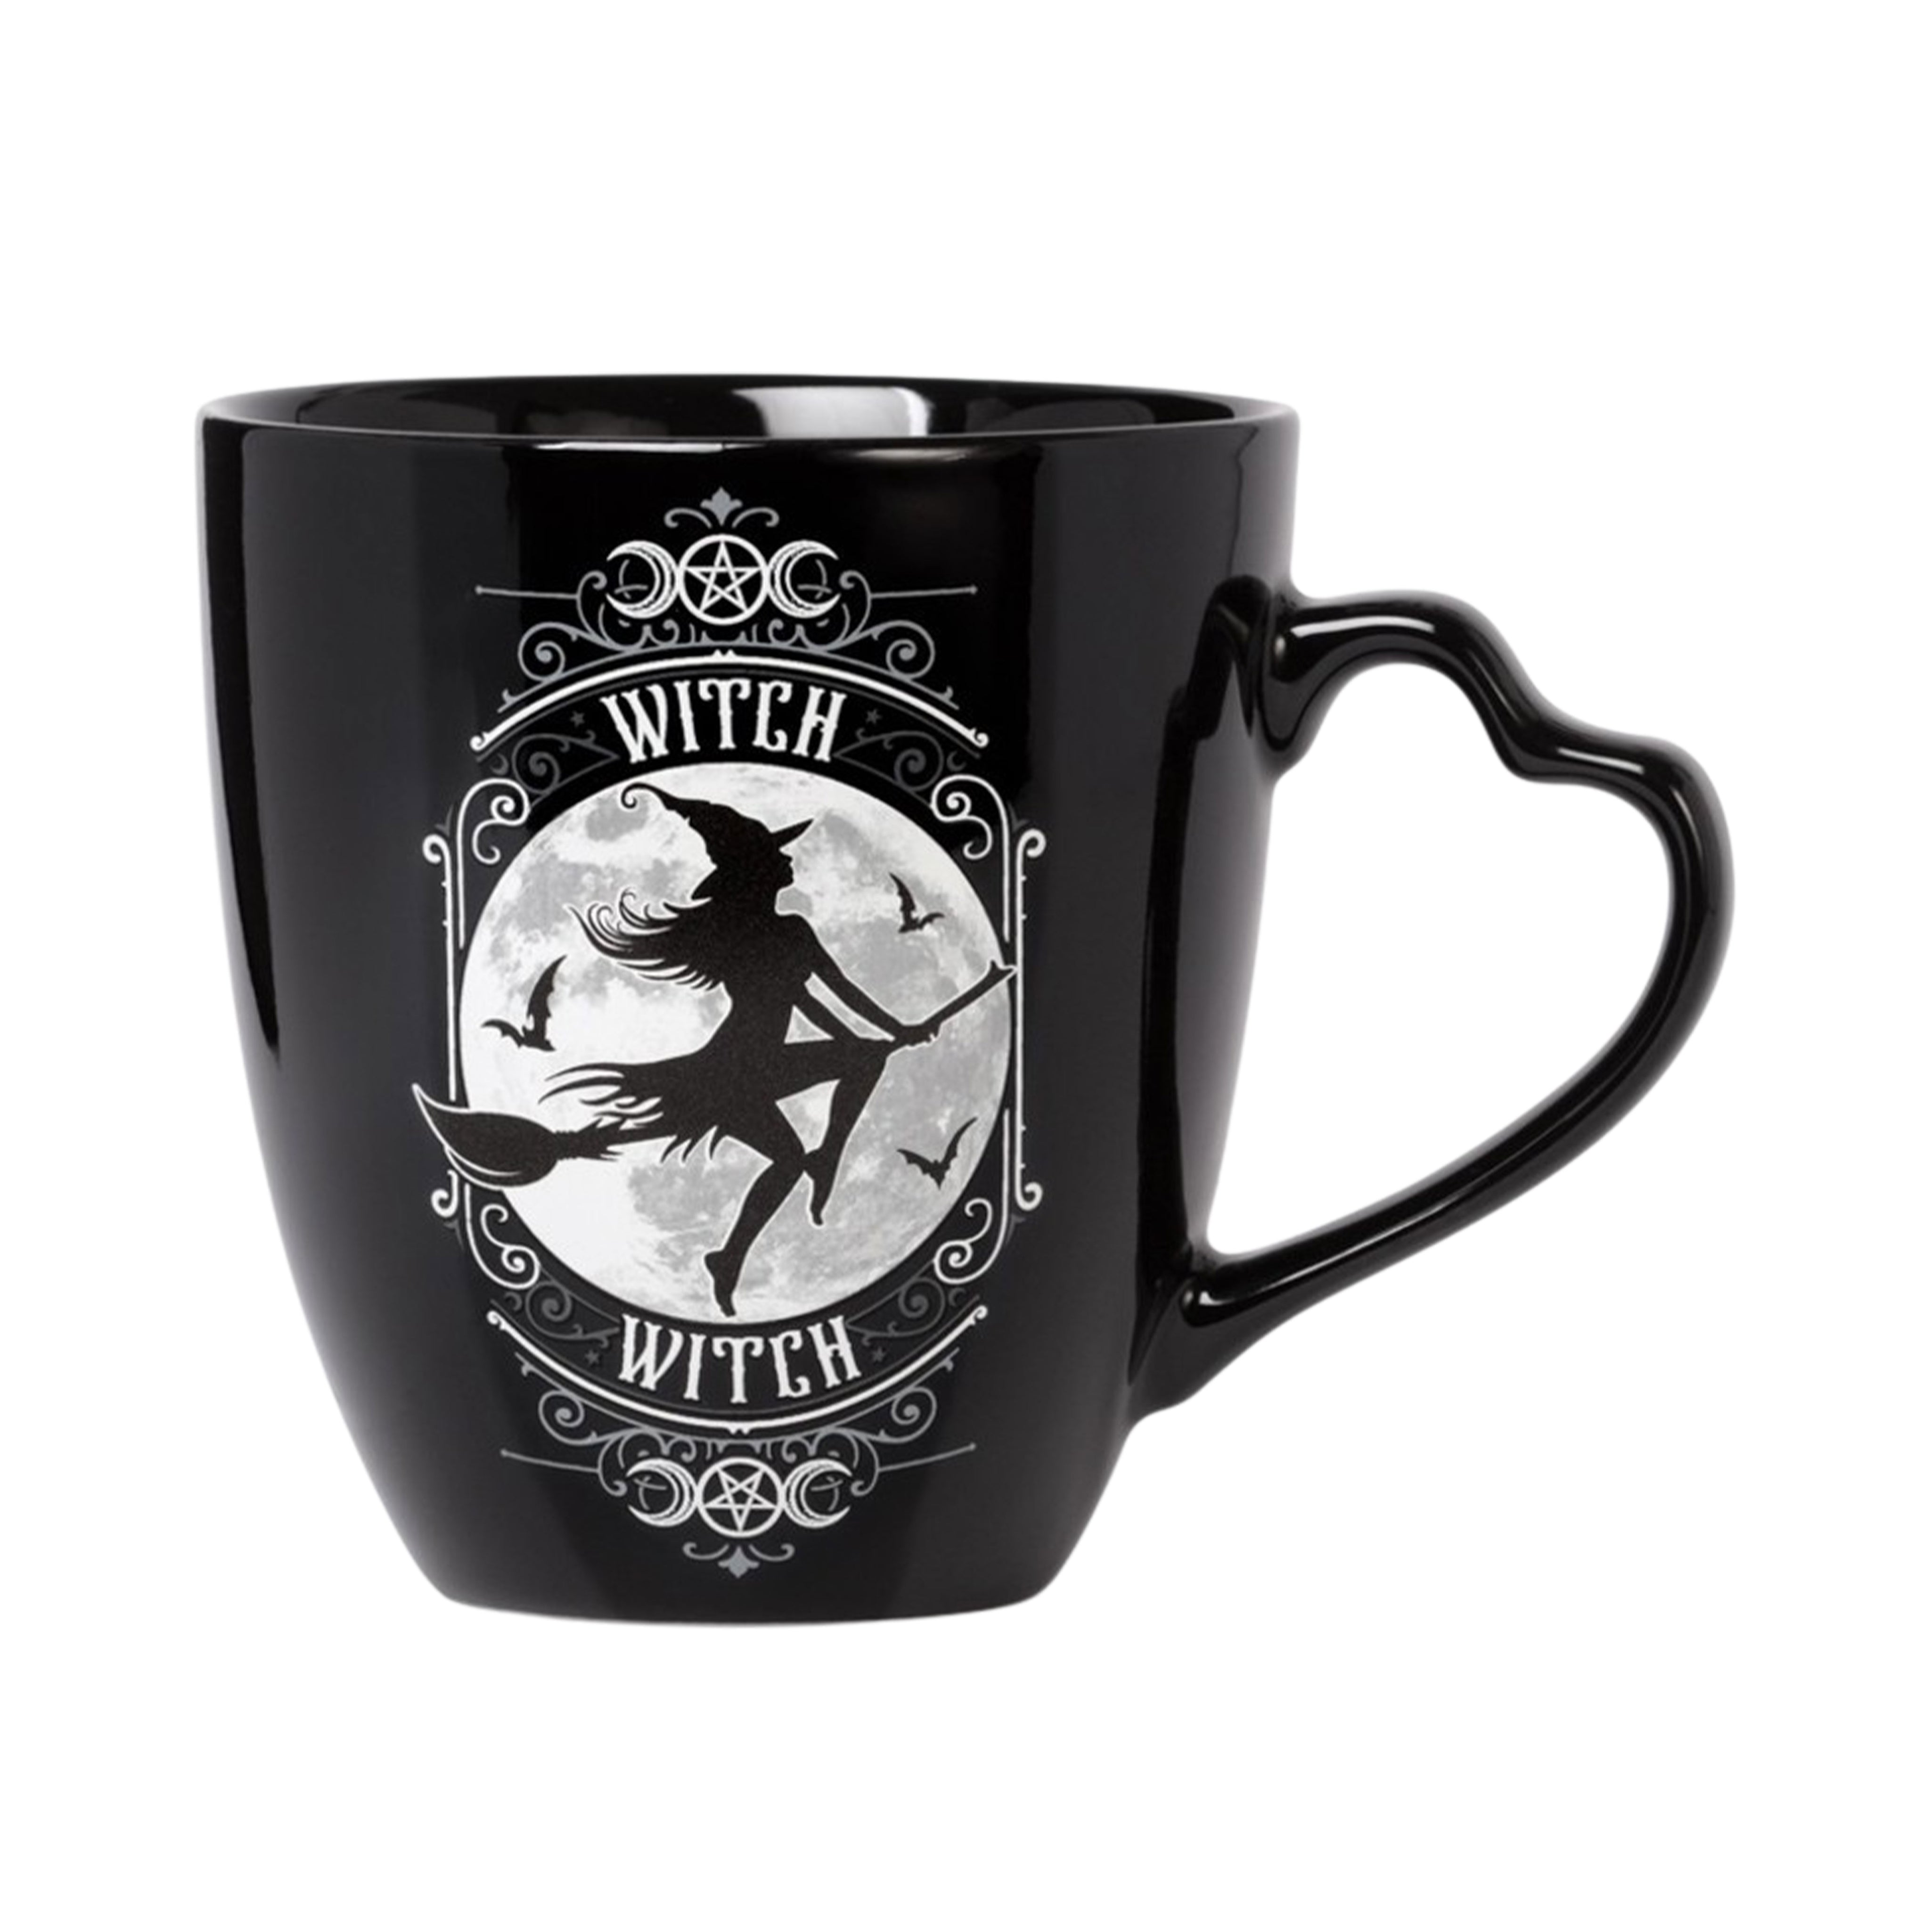 Witch & Warlock Black Mug Set